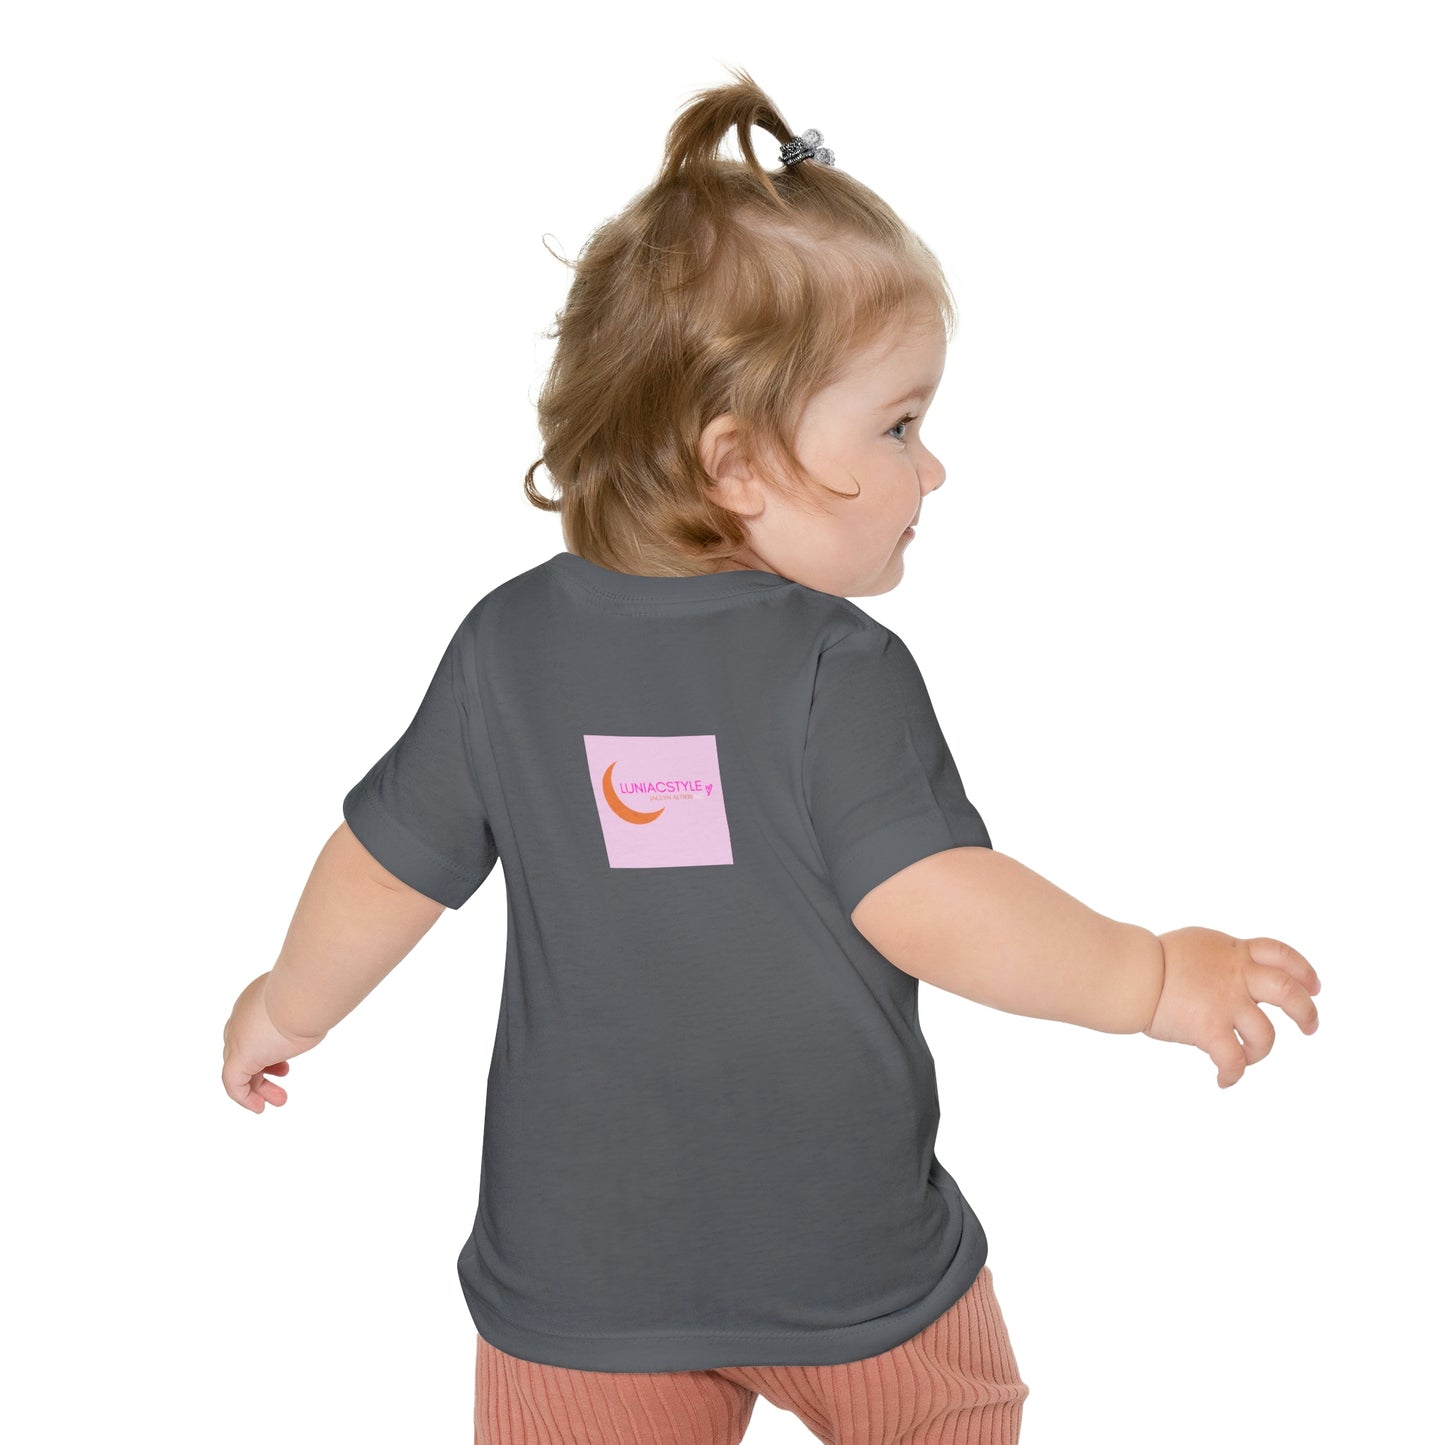 "ROSES + BESTIES" GIRL TALK ART Baby Short Sleeve T-Shirt